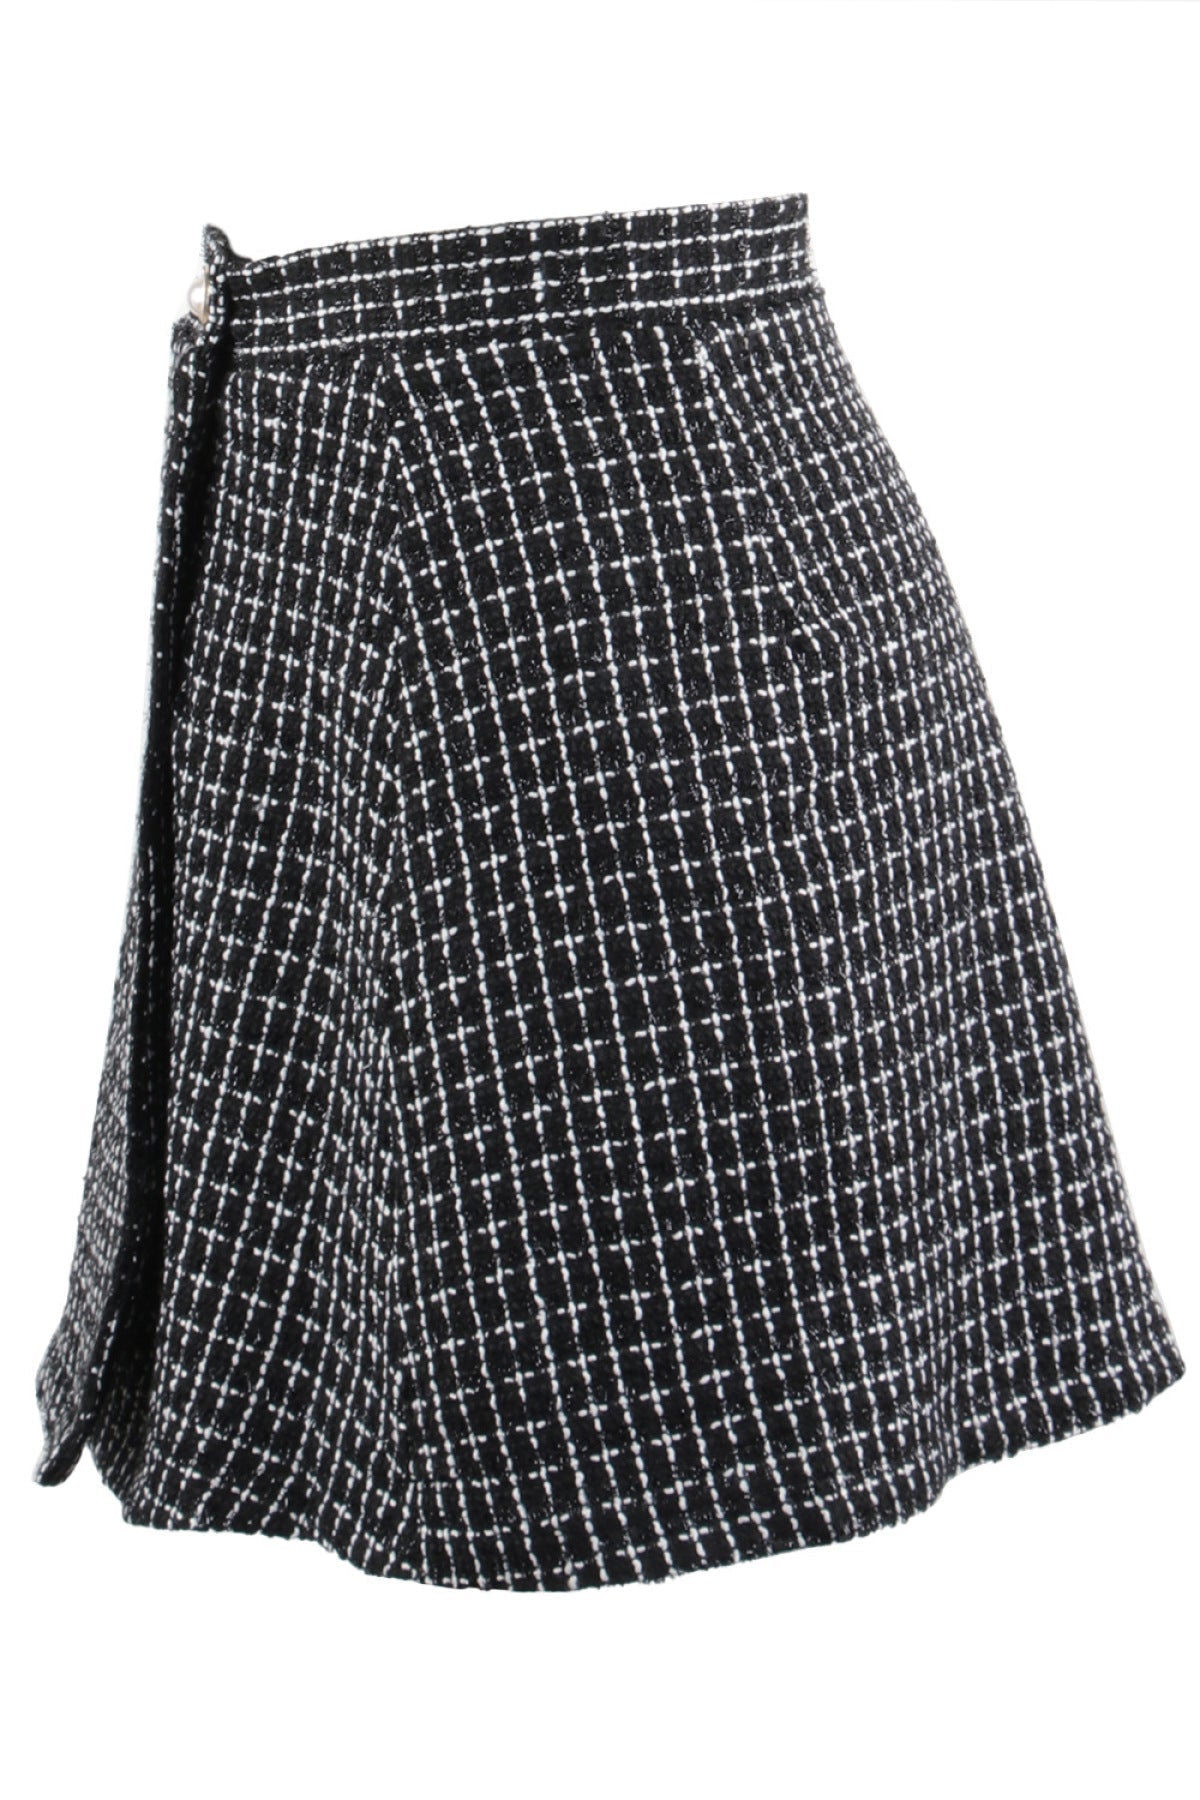 Black Plaid High Waist Tube Skirt